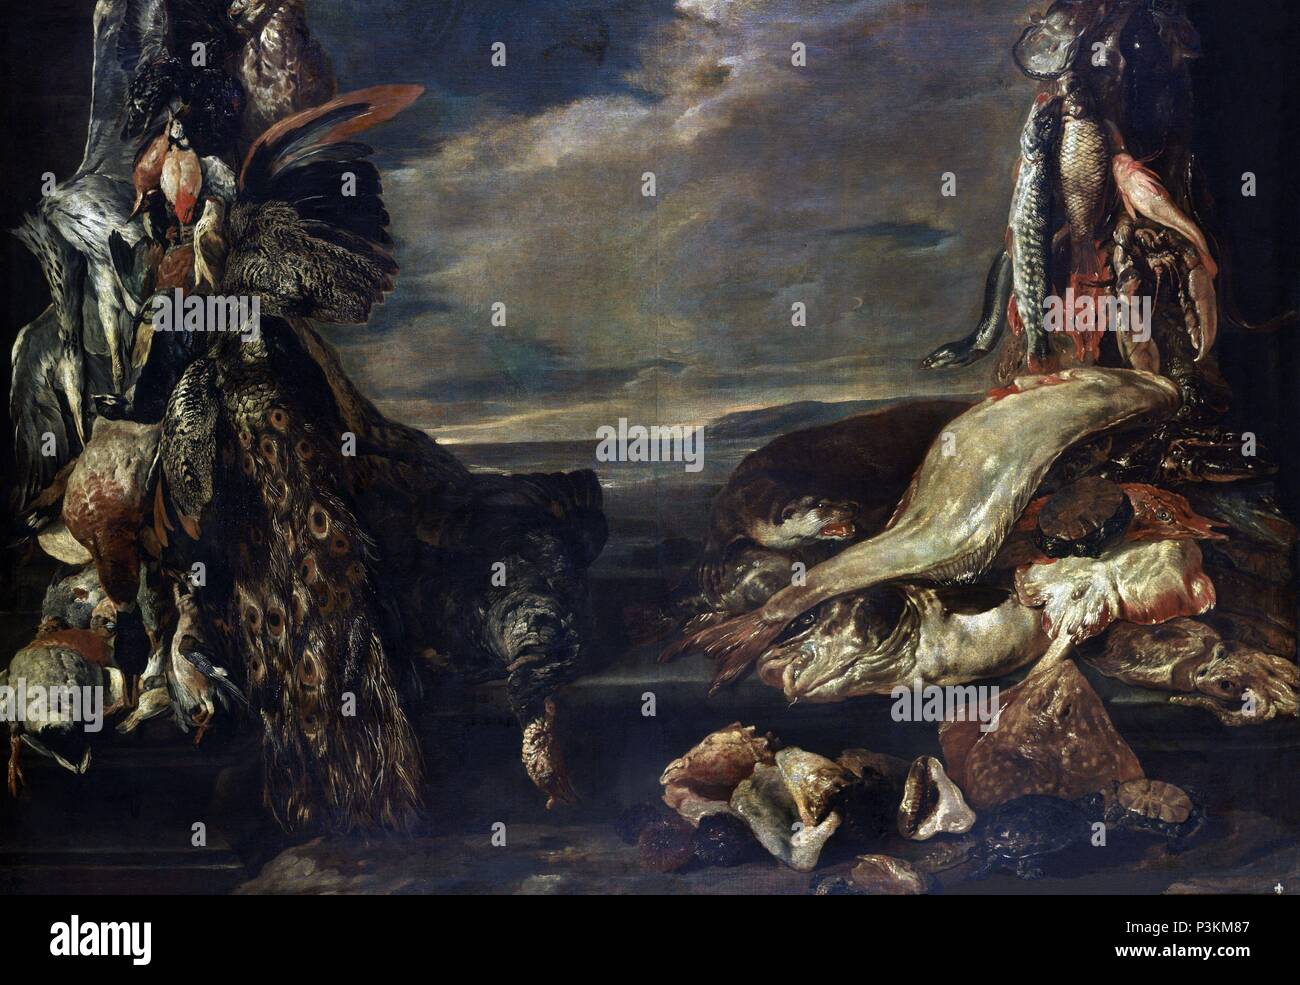 BODEGON - siglo XVII - OLEO/LIENZO - 168x237 cm - NP 1366 - ESCUELA FLAMENCA. Auteur : Pieter Boel (1622-1674). Emplacement : Museo del Prado-PINTURA, MADRID, ESPAGNE. Banque D'Images